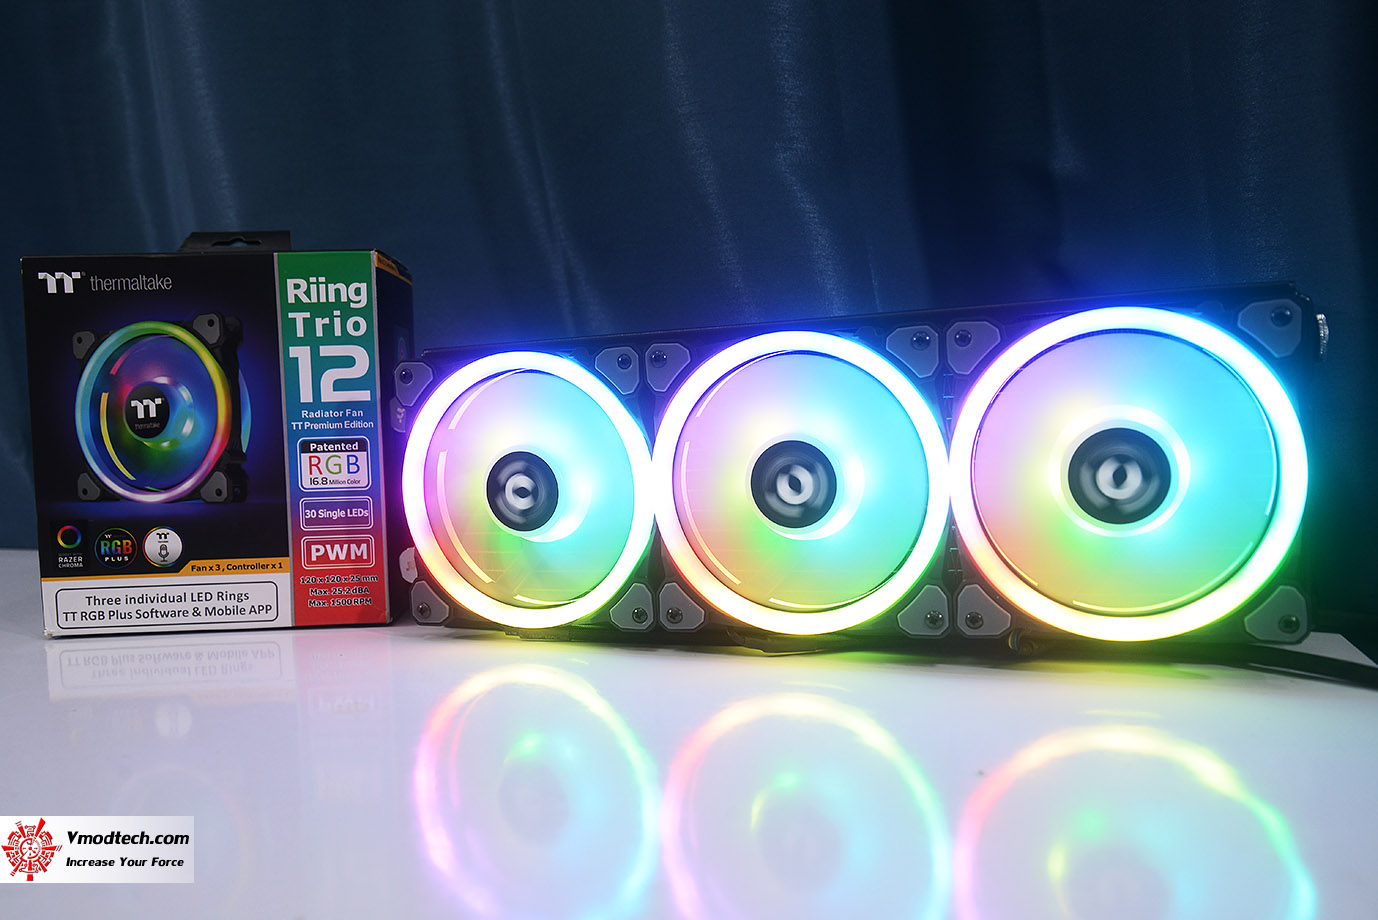 dsc 7962 Riing Trio 12 LED RGB Radiator Fan TT Premium Edition (3 Fan Pack) Review